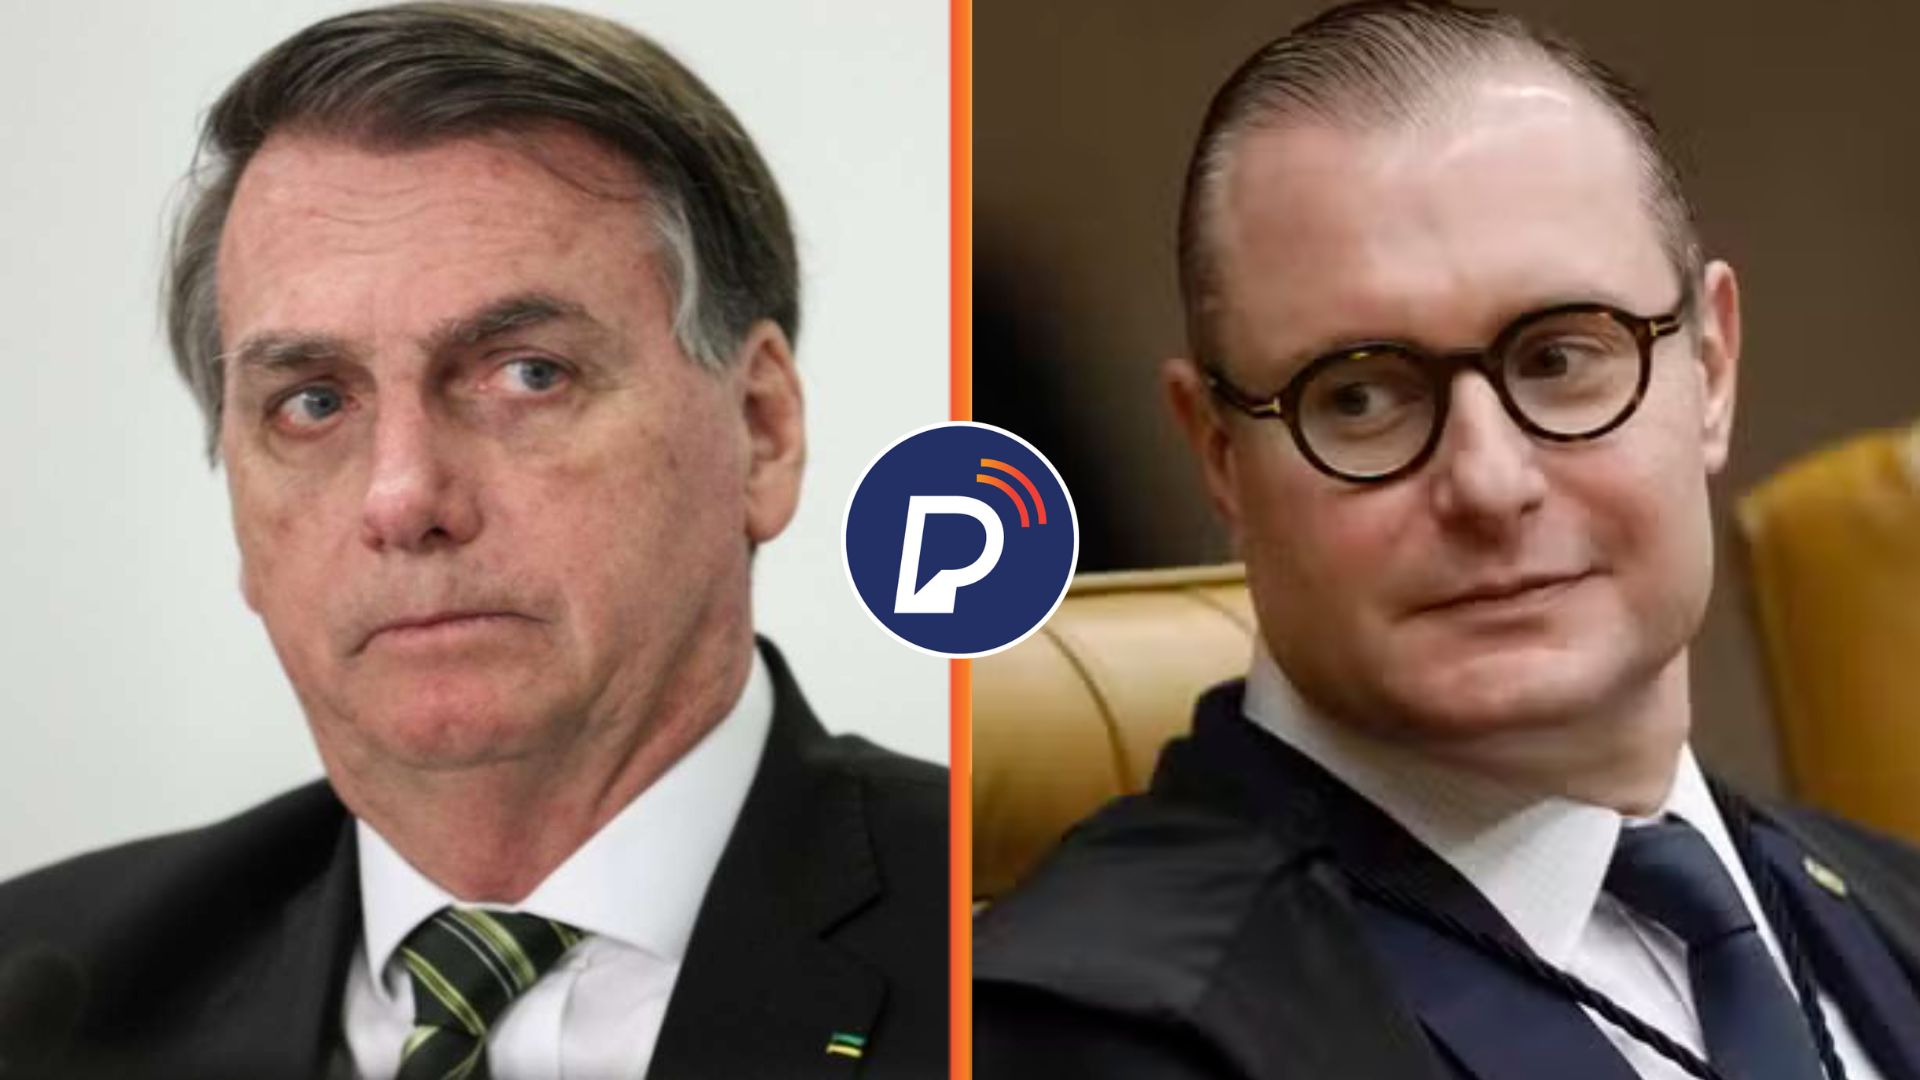 Zanin se declara impedido para julgar recurso sobre inelegibilidade de Bolsonaro